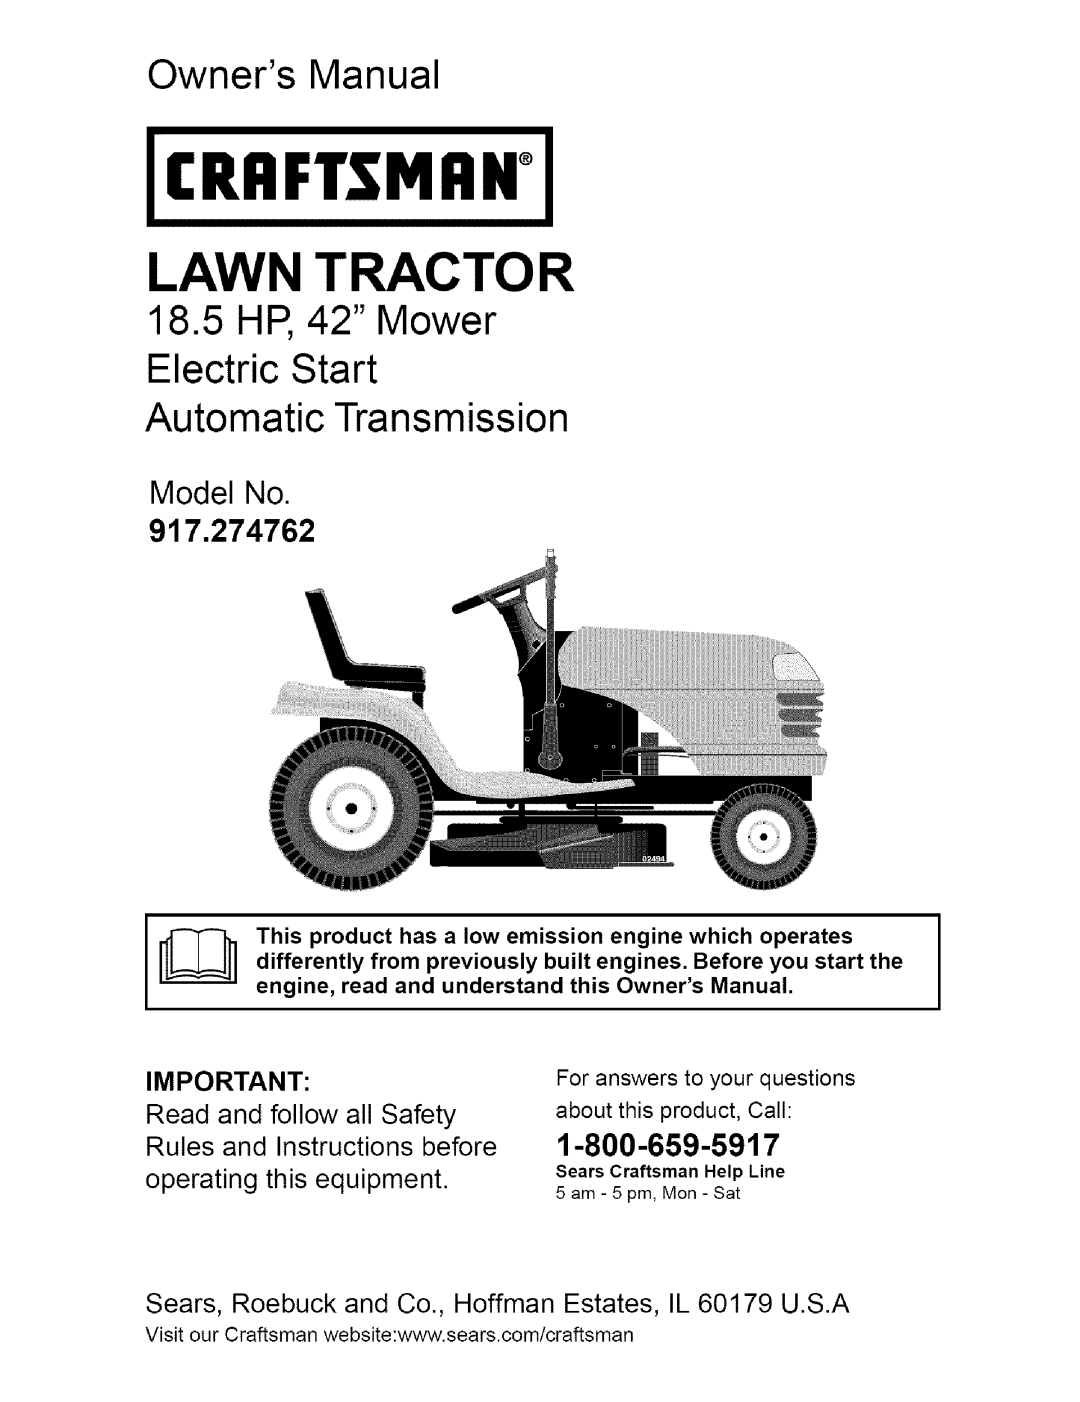 Craftsman 917.274762 owner manual Icrrftsmiihi, Model No, Lawn Tractor, Owners Manual, 1-800-659-5917 